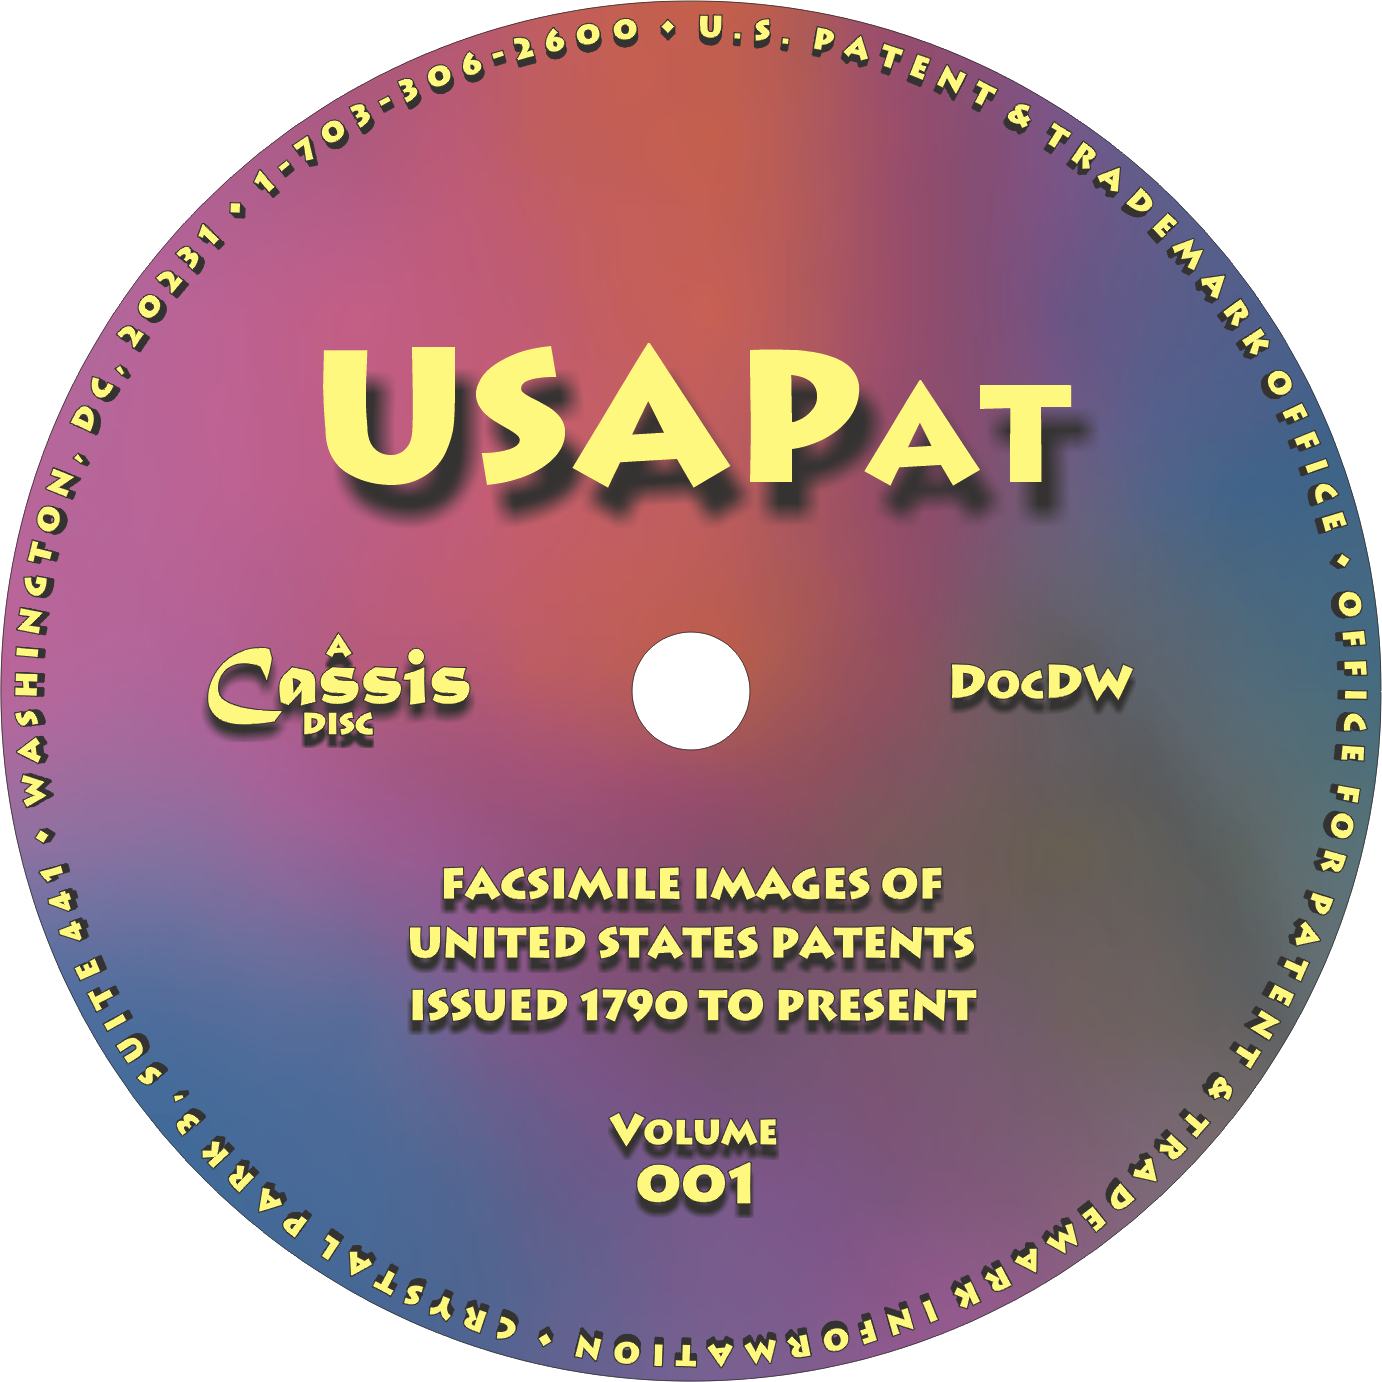 Future USAPat Discs